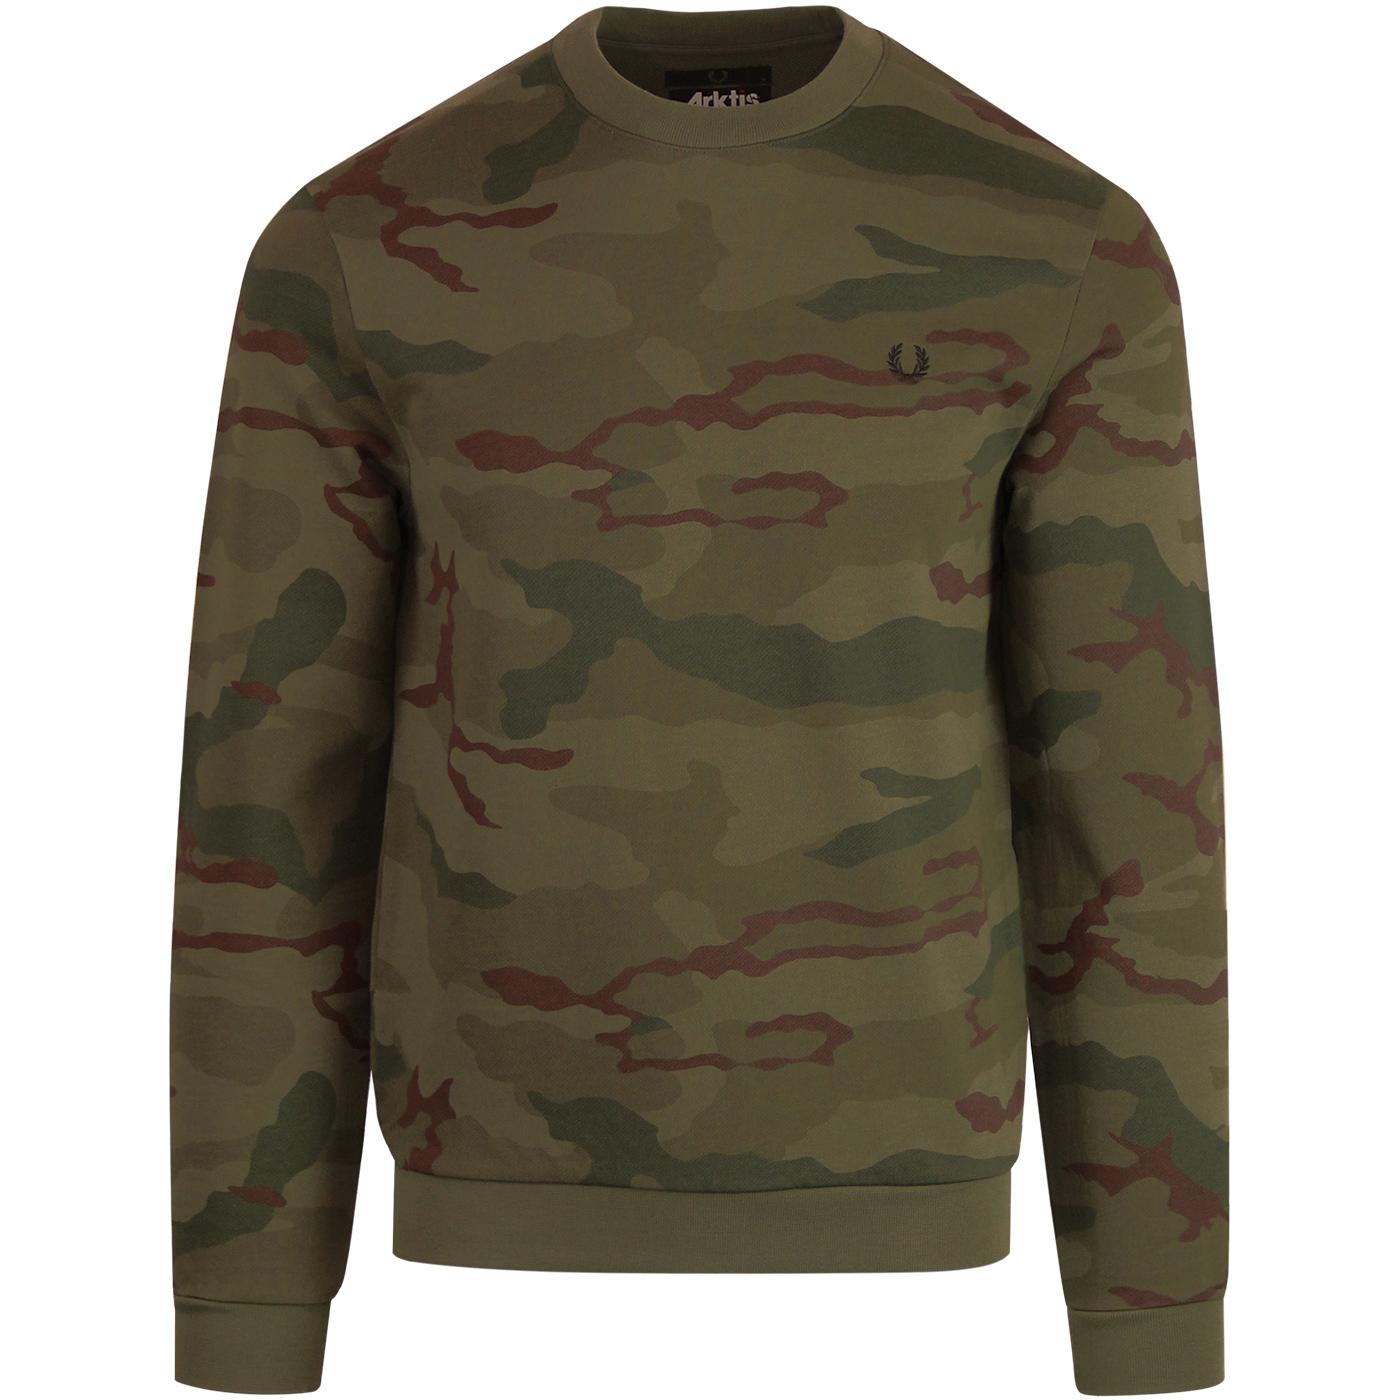 FRED PERRY X ARKTIS Retro Camouflage Sweatshirt